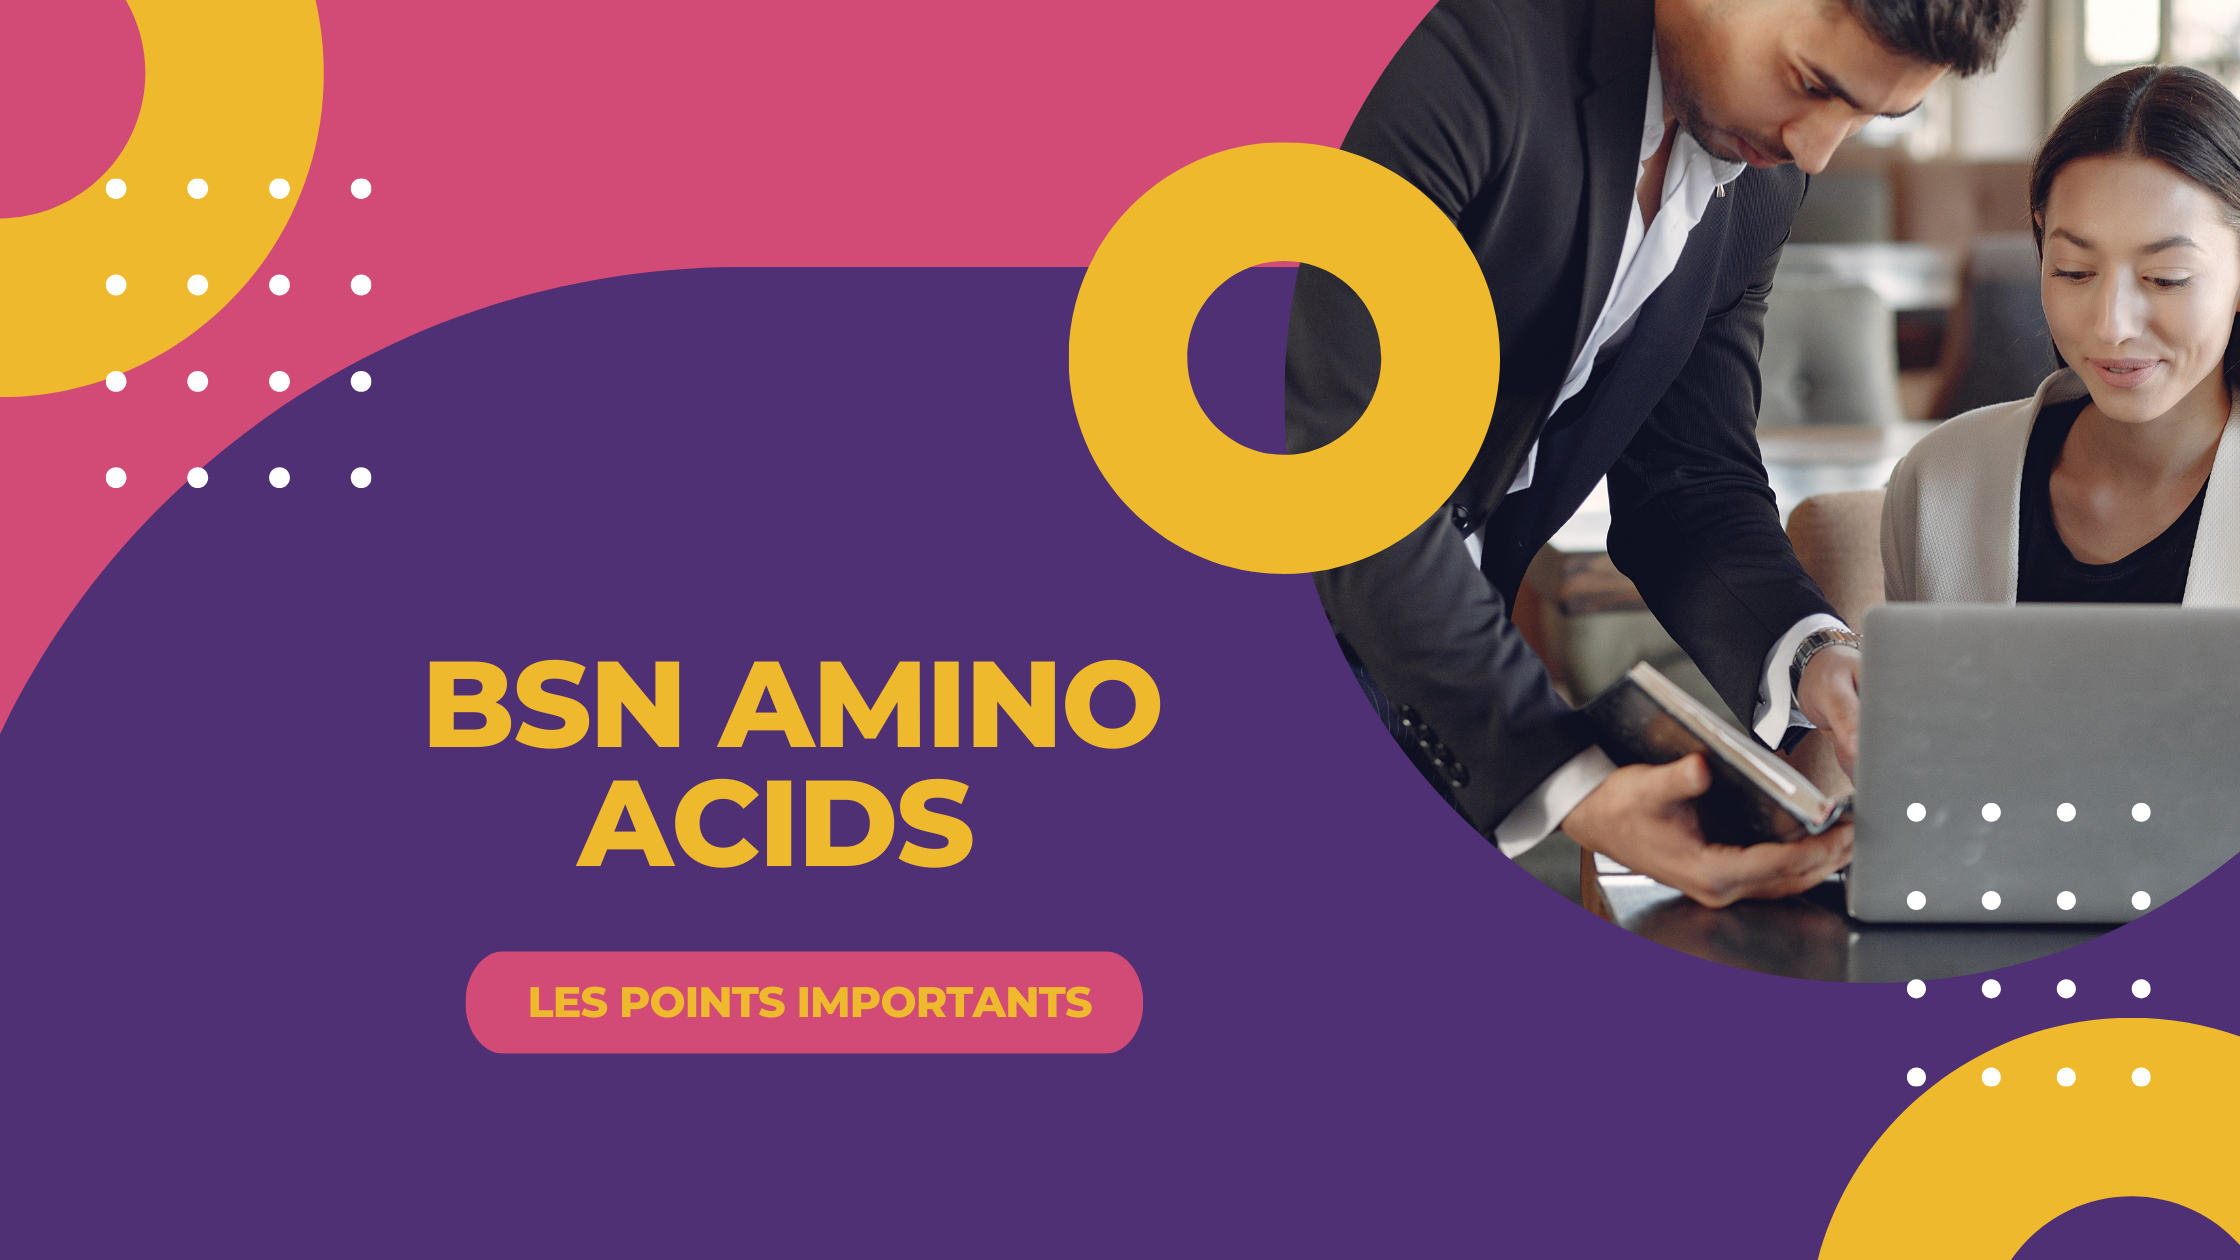 bsn amino acids | Les points importants